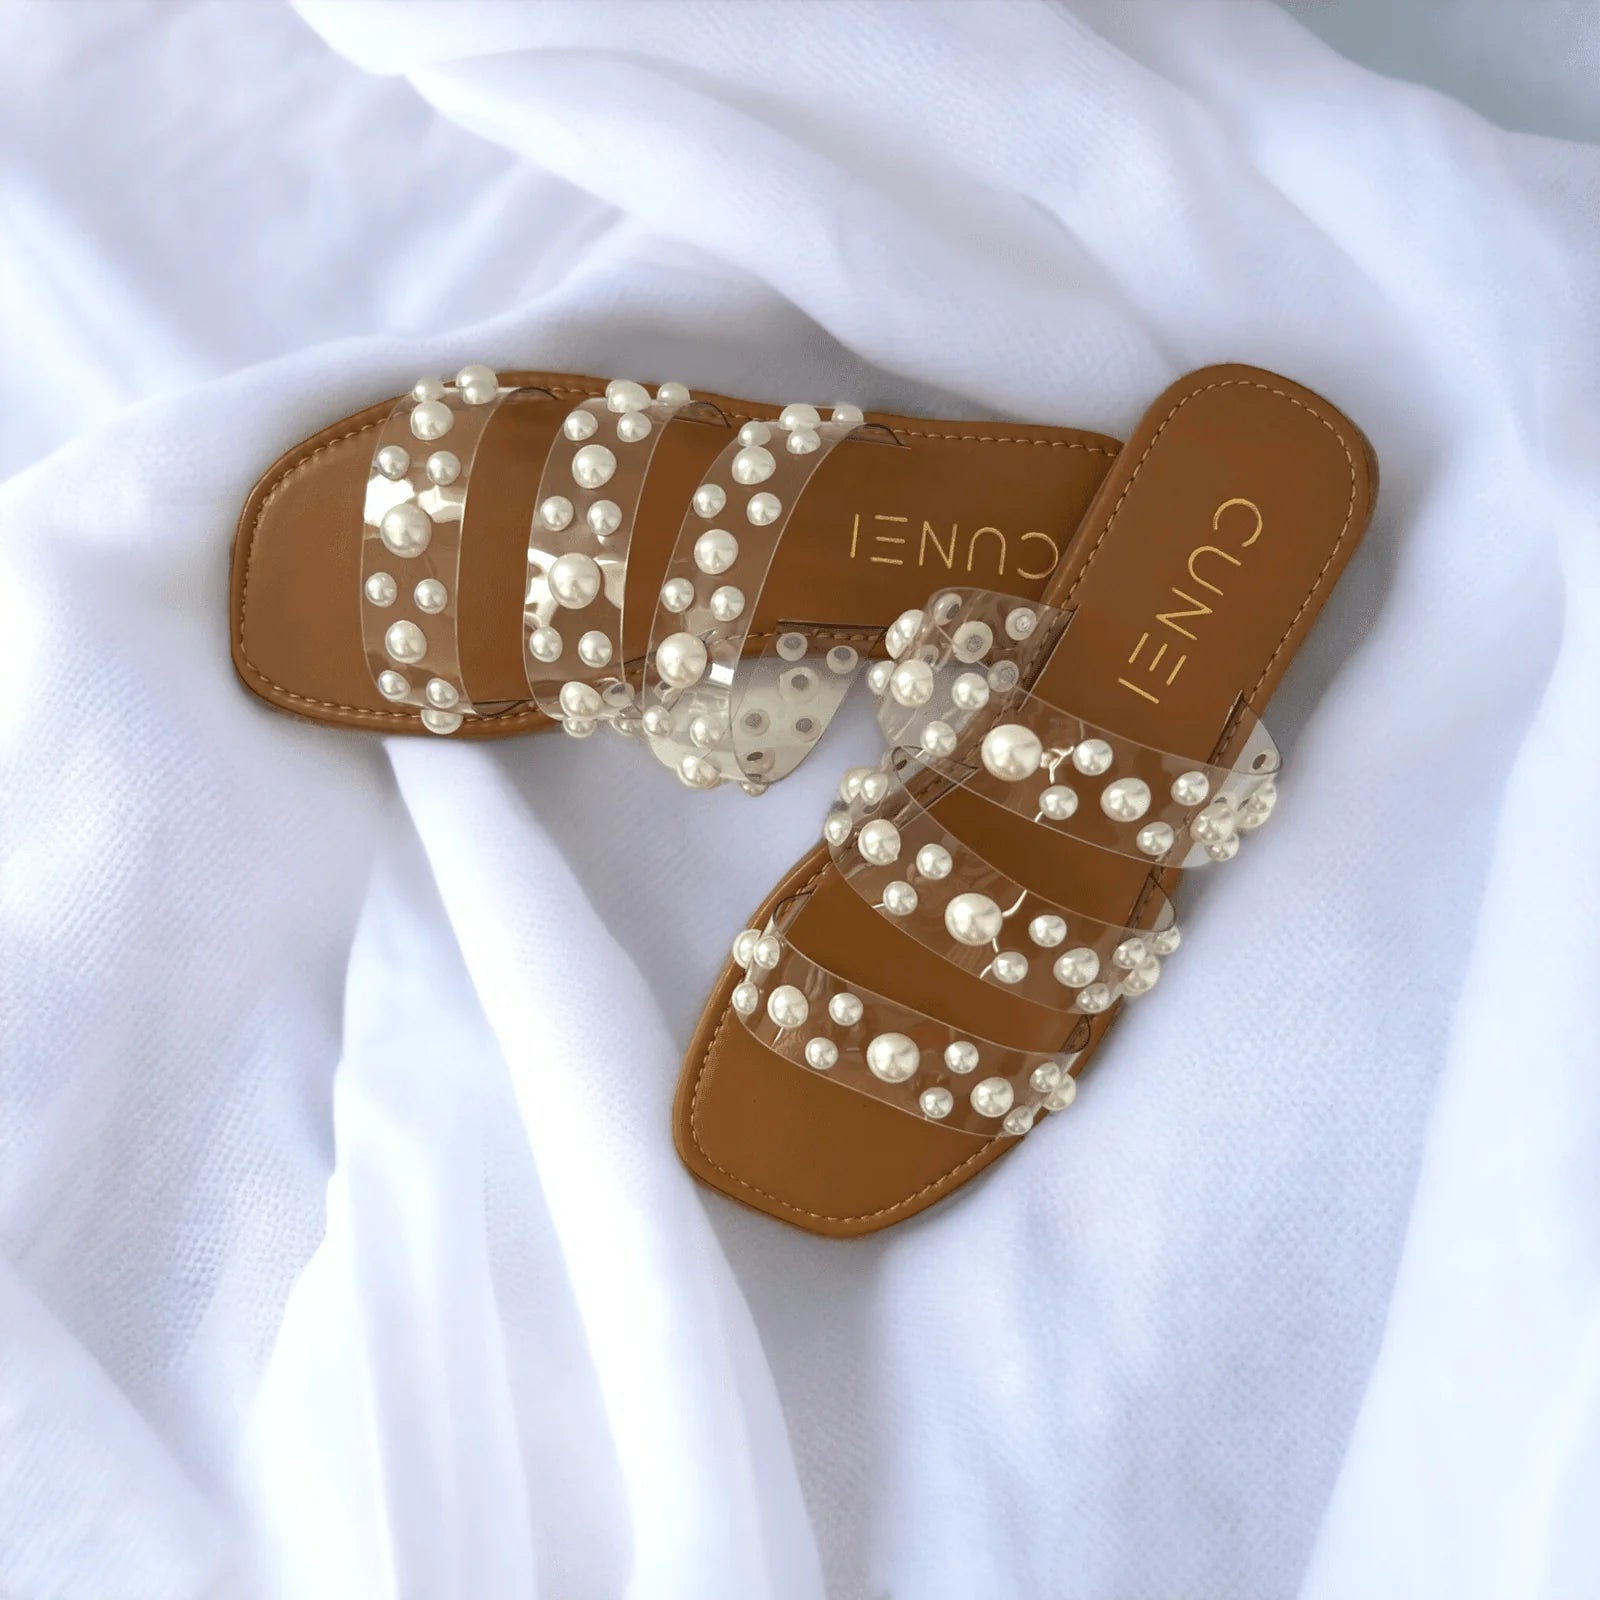 Buy Beige Flat Sandals for Women by Chere Online | Ajio.com